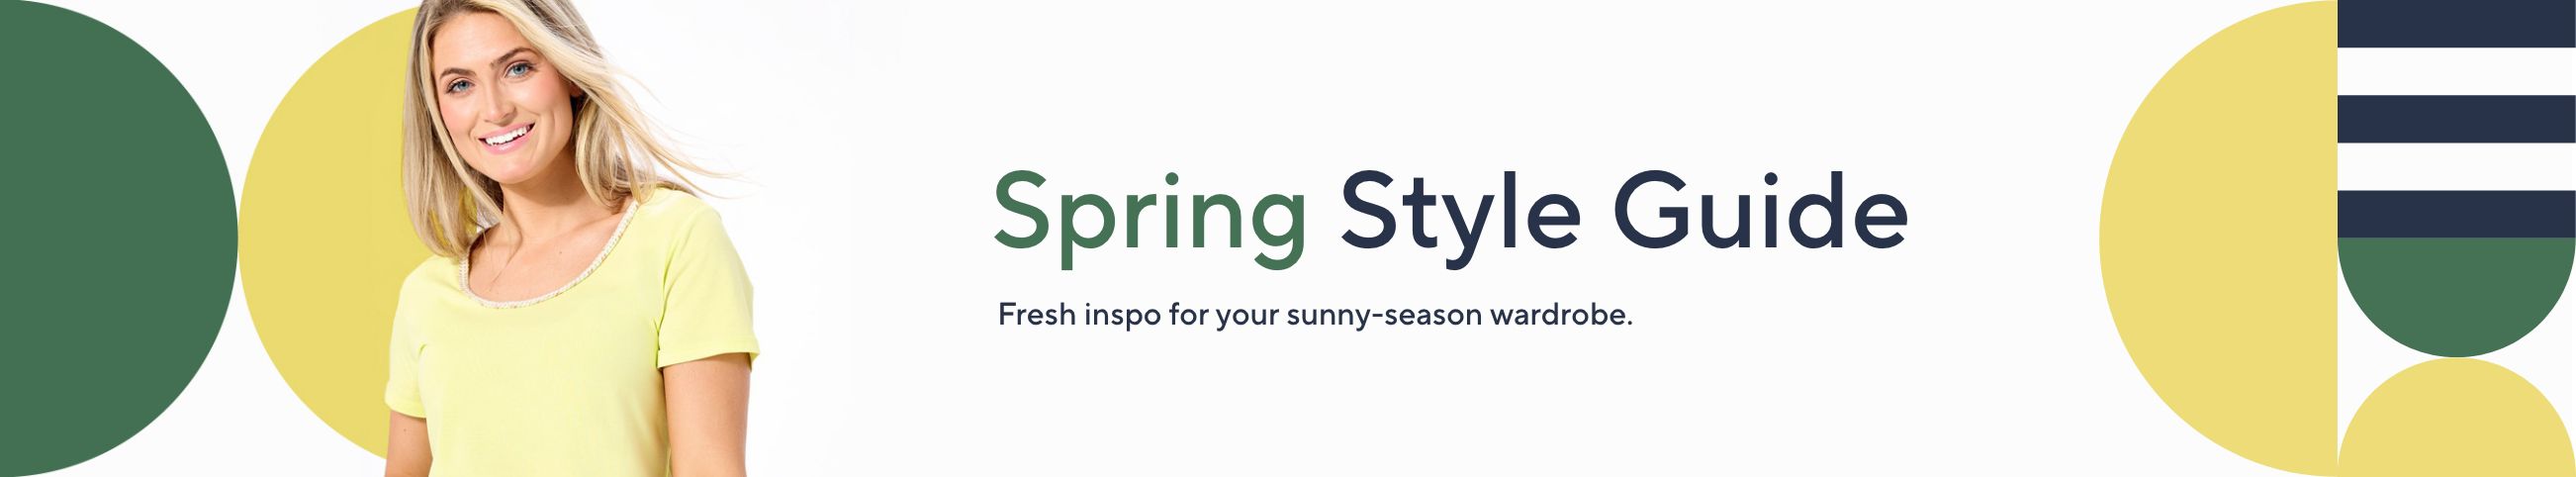 Spring Style Guide - Fresh inspo for your sunny-season wardrobe.